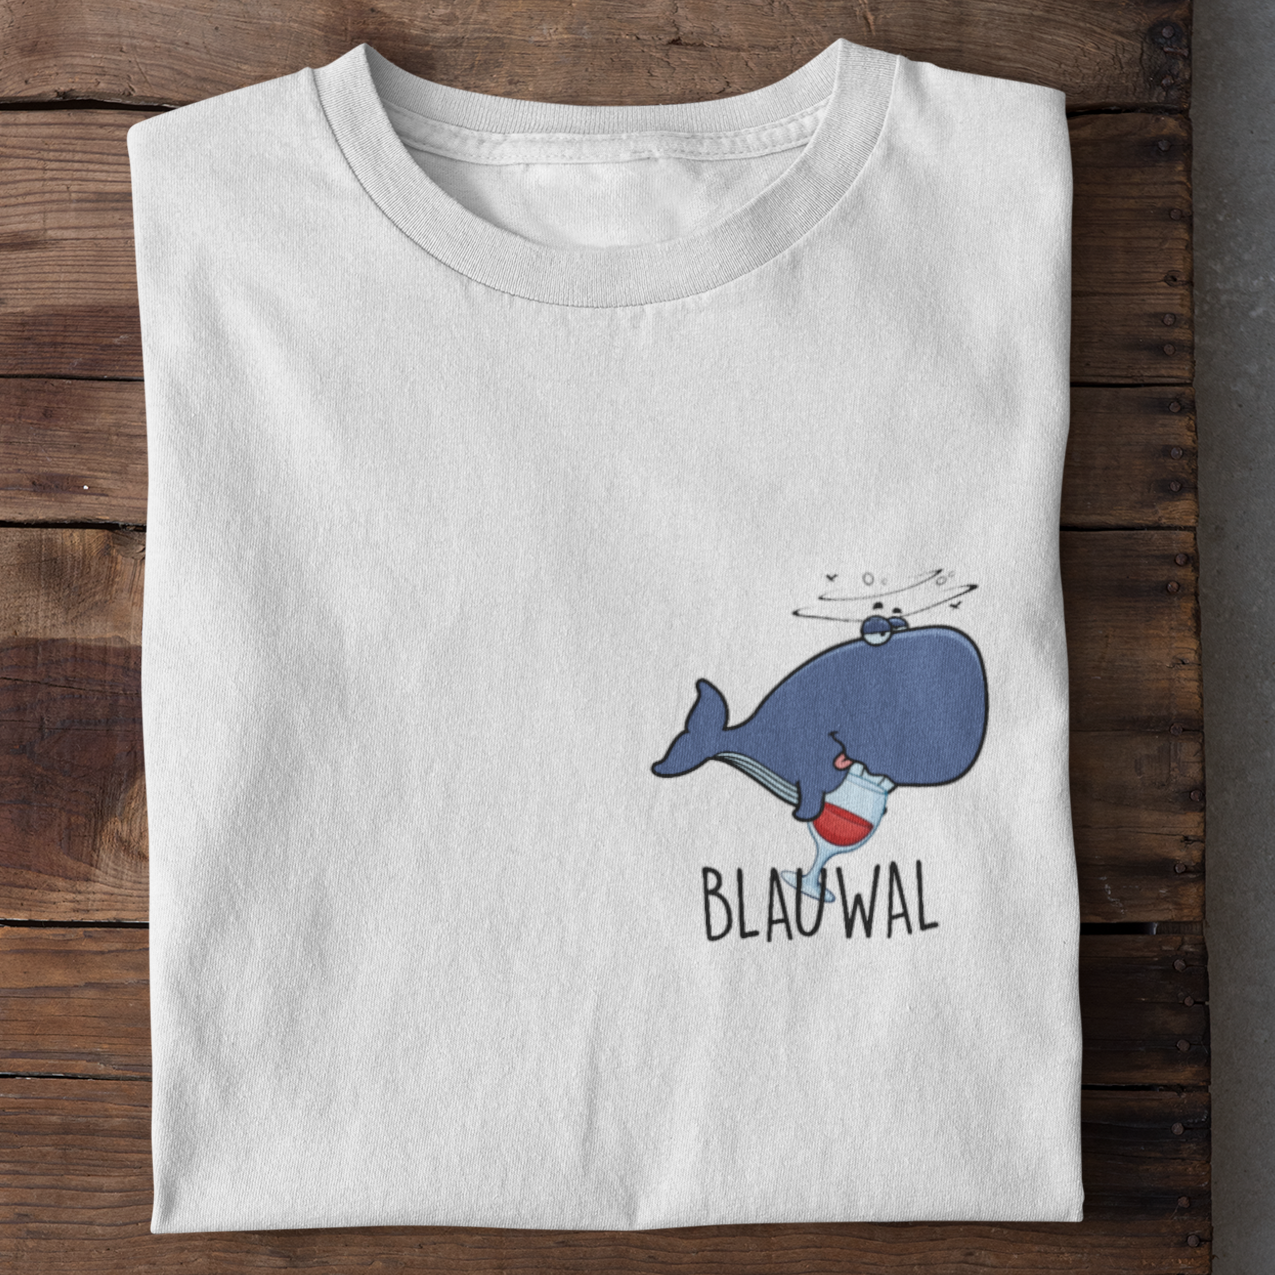 BLAUWAL - Shirt Herren - Weinspirits